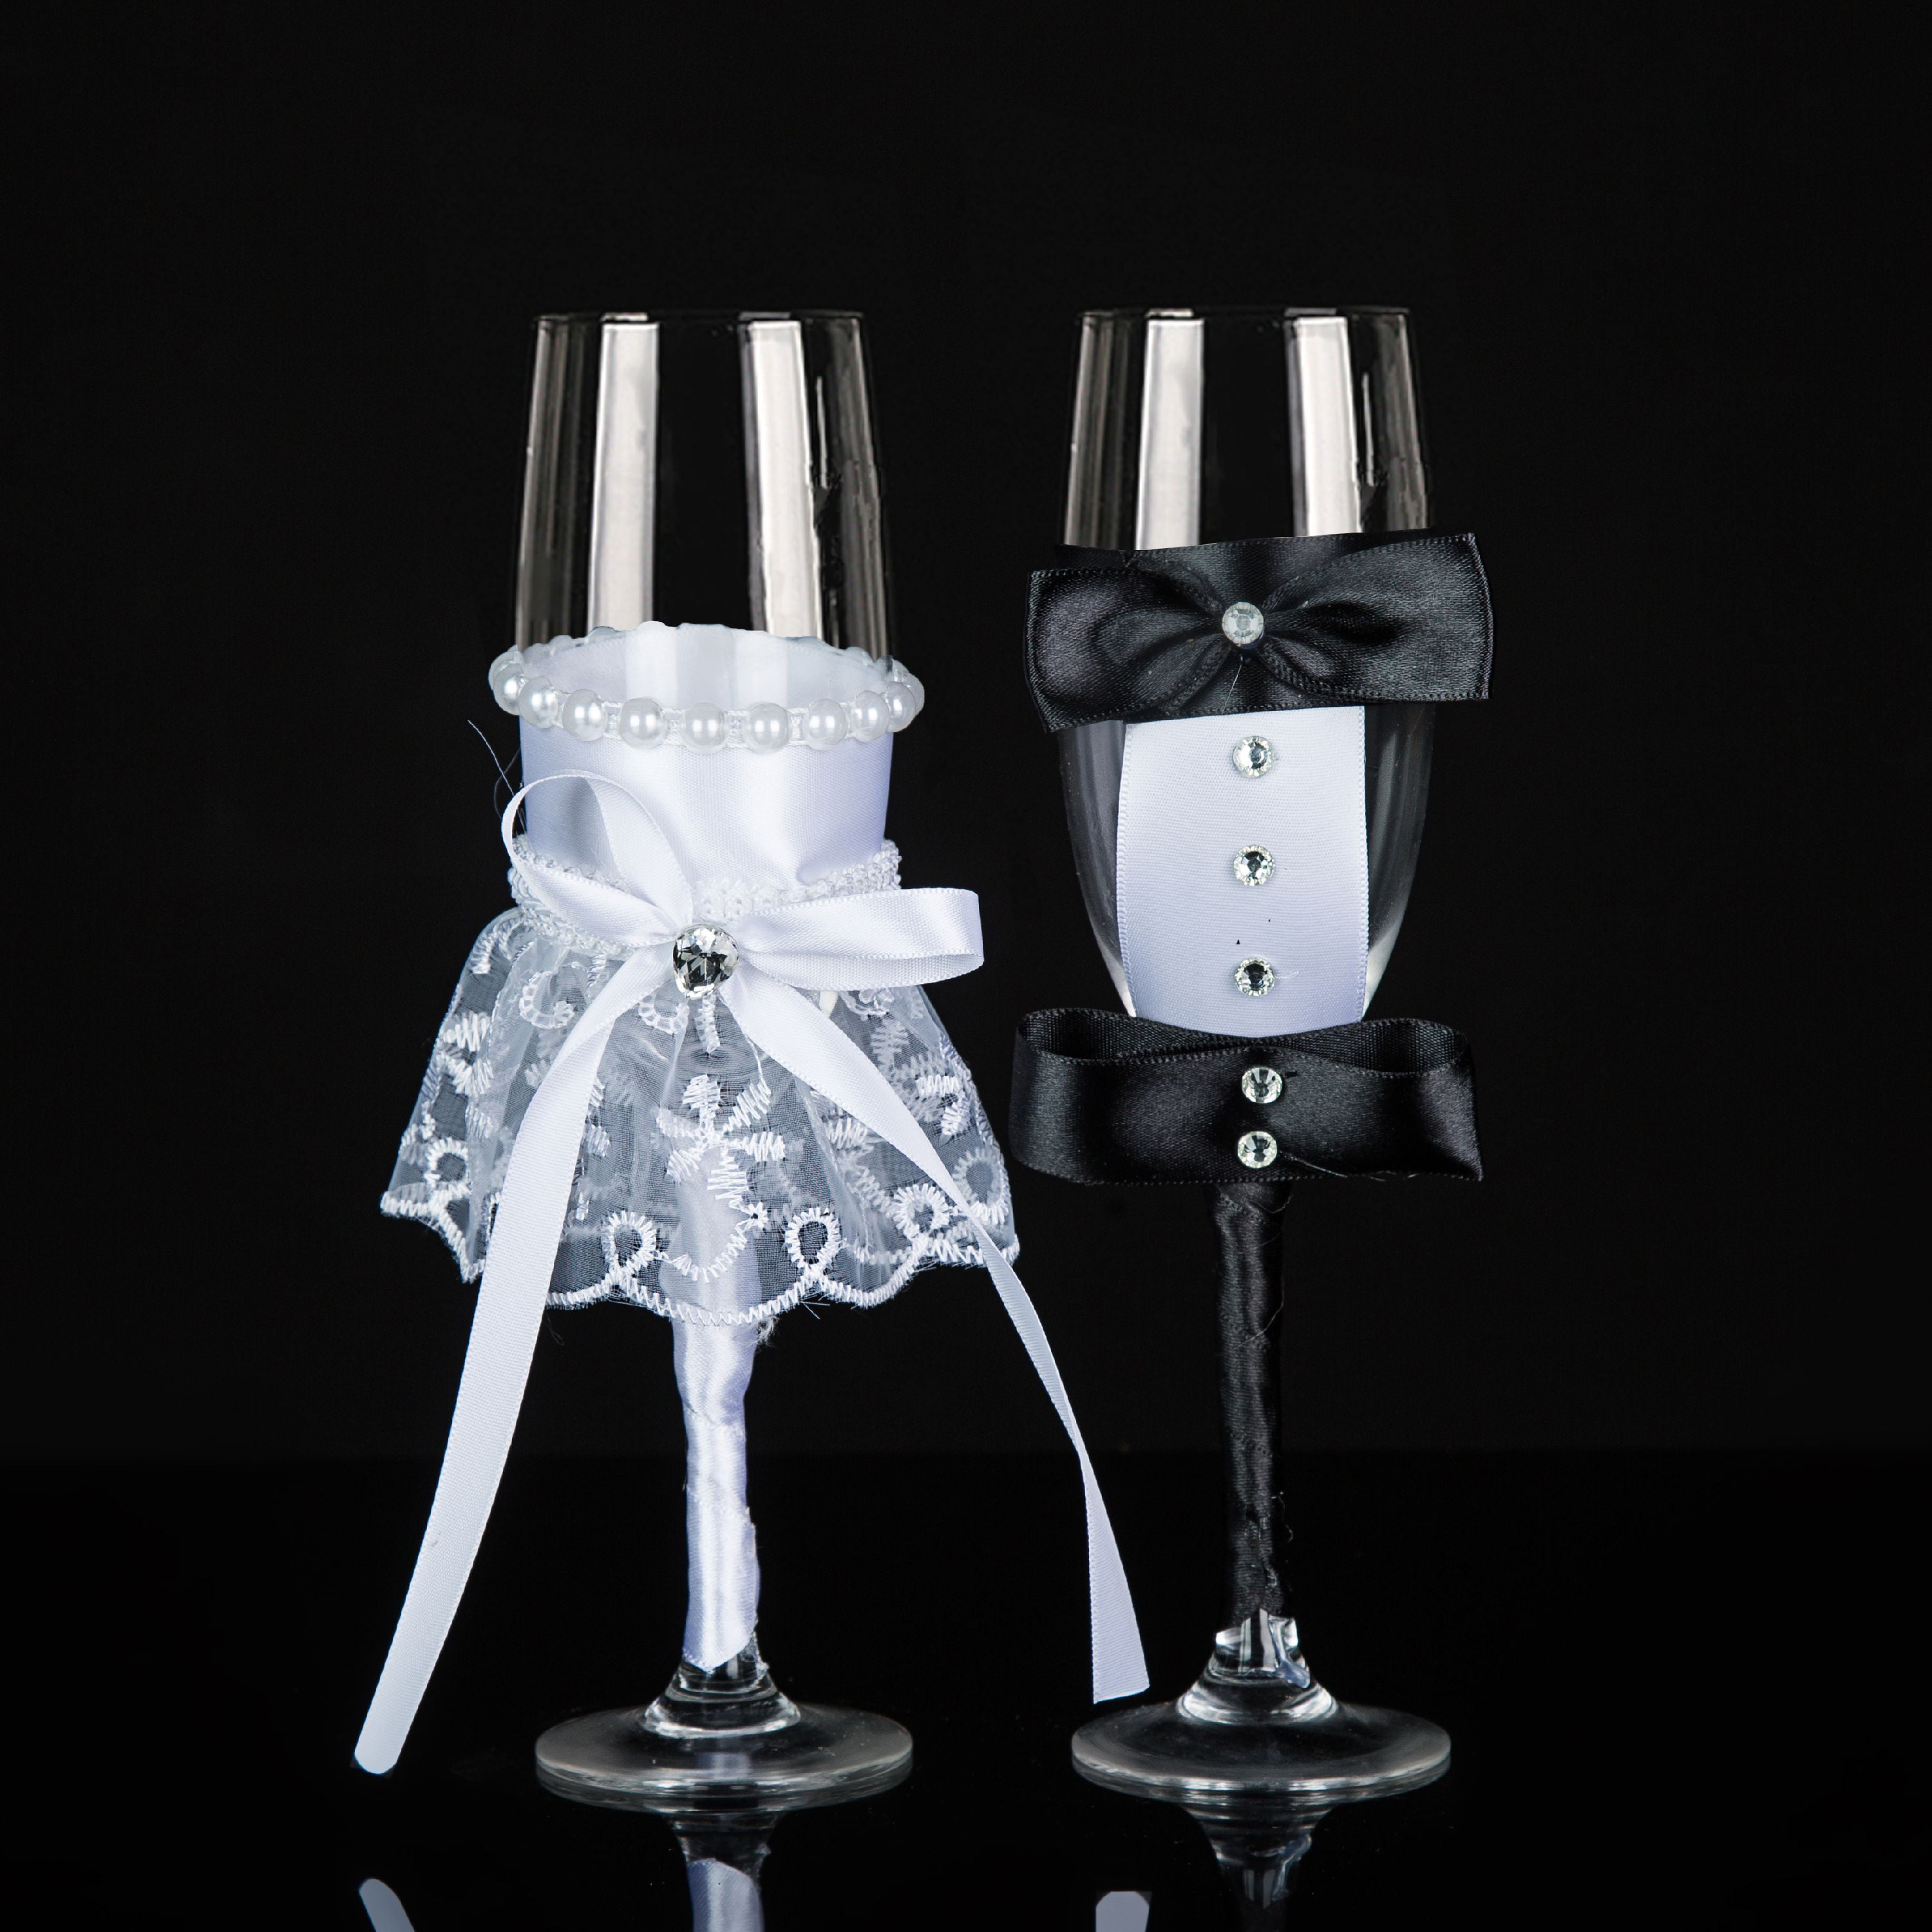 Custom Wedding Champagne Glasses Toasting Glasses Toasting Flutes For Bride Groom Champagne Flutes Wedding Gift Decorations Bride and Groom